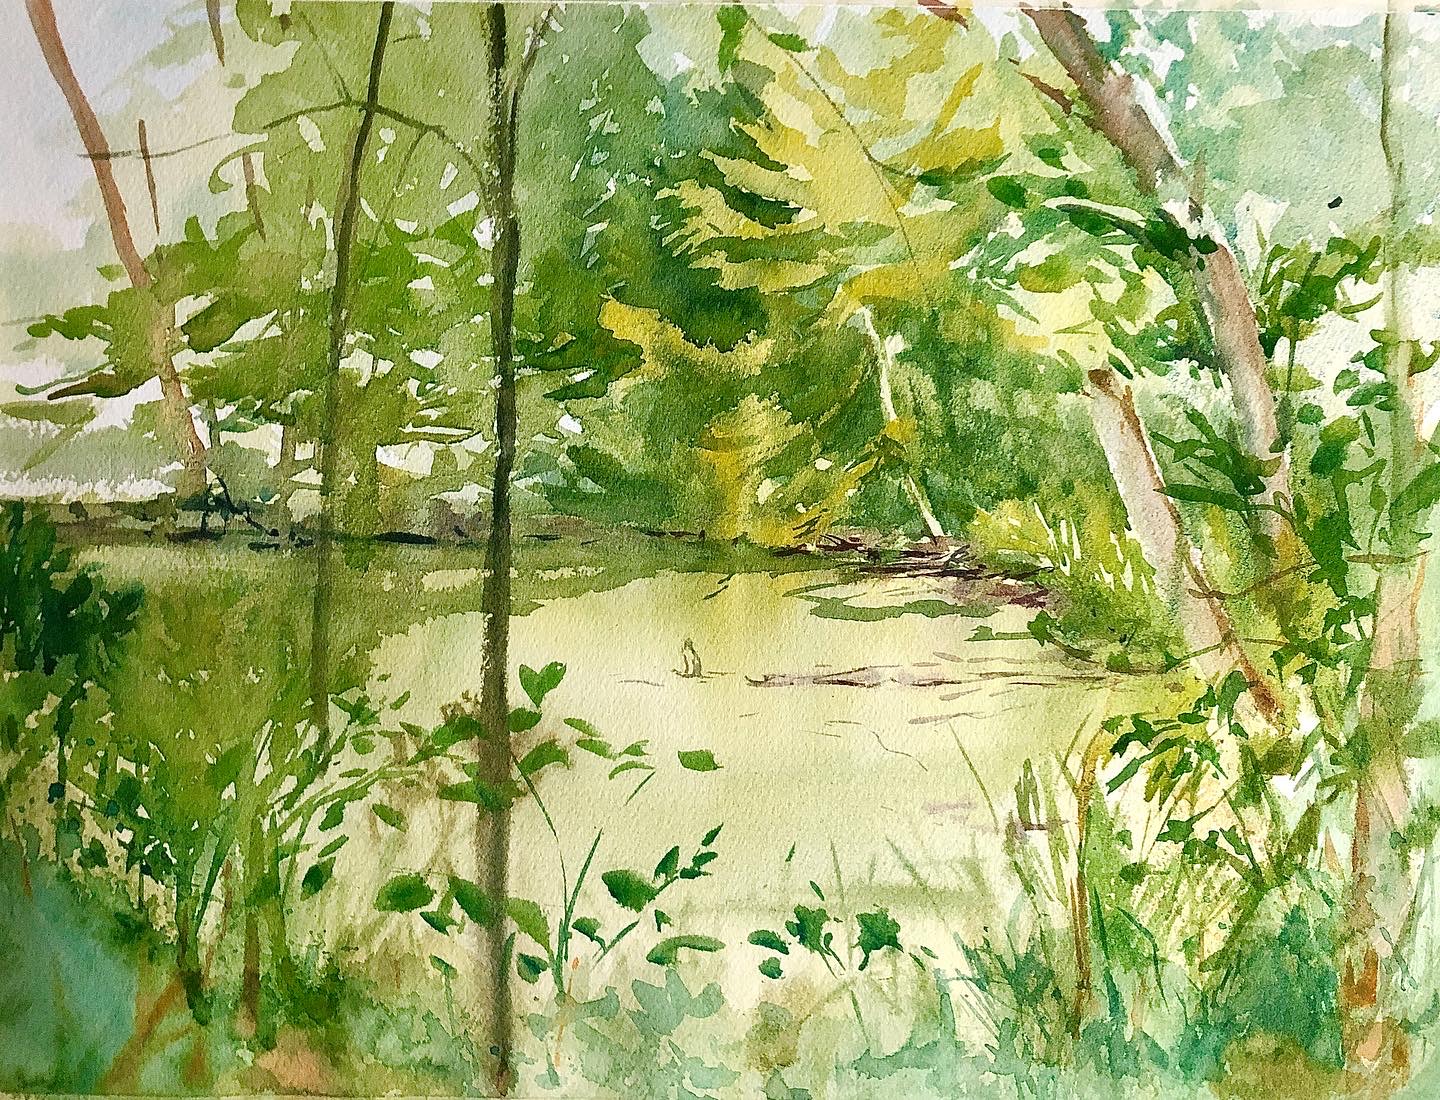 Upper Sangamon River  Allerton
Watercolor
15" X 11"
$355.